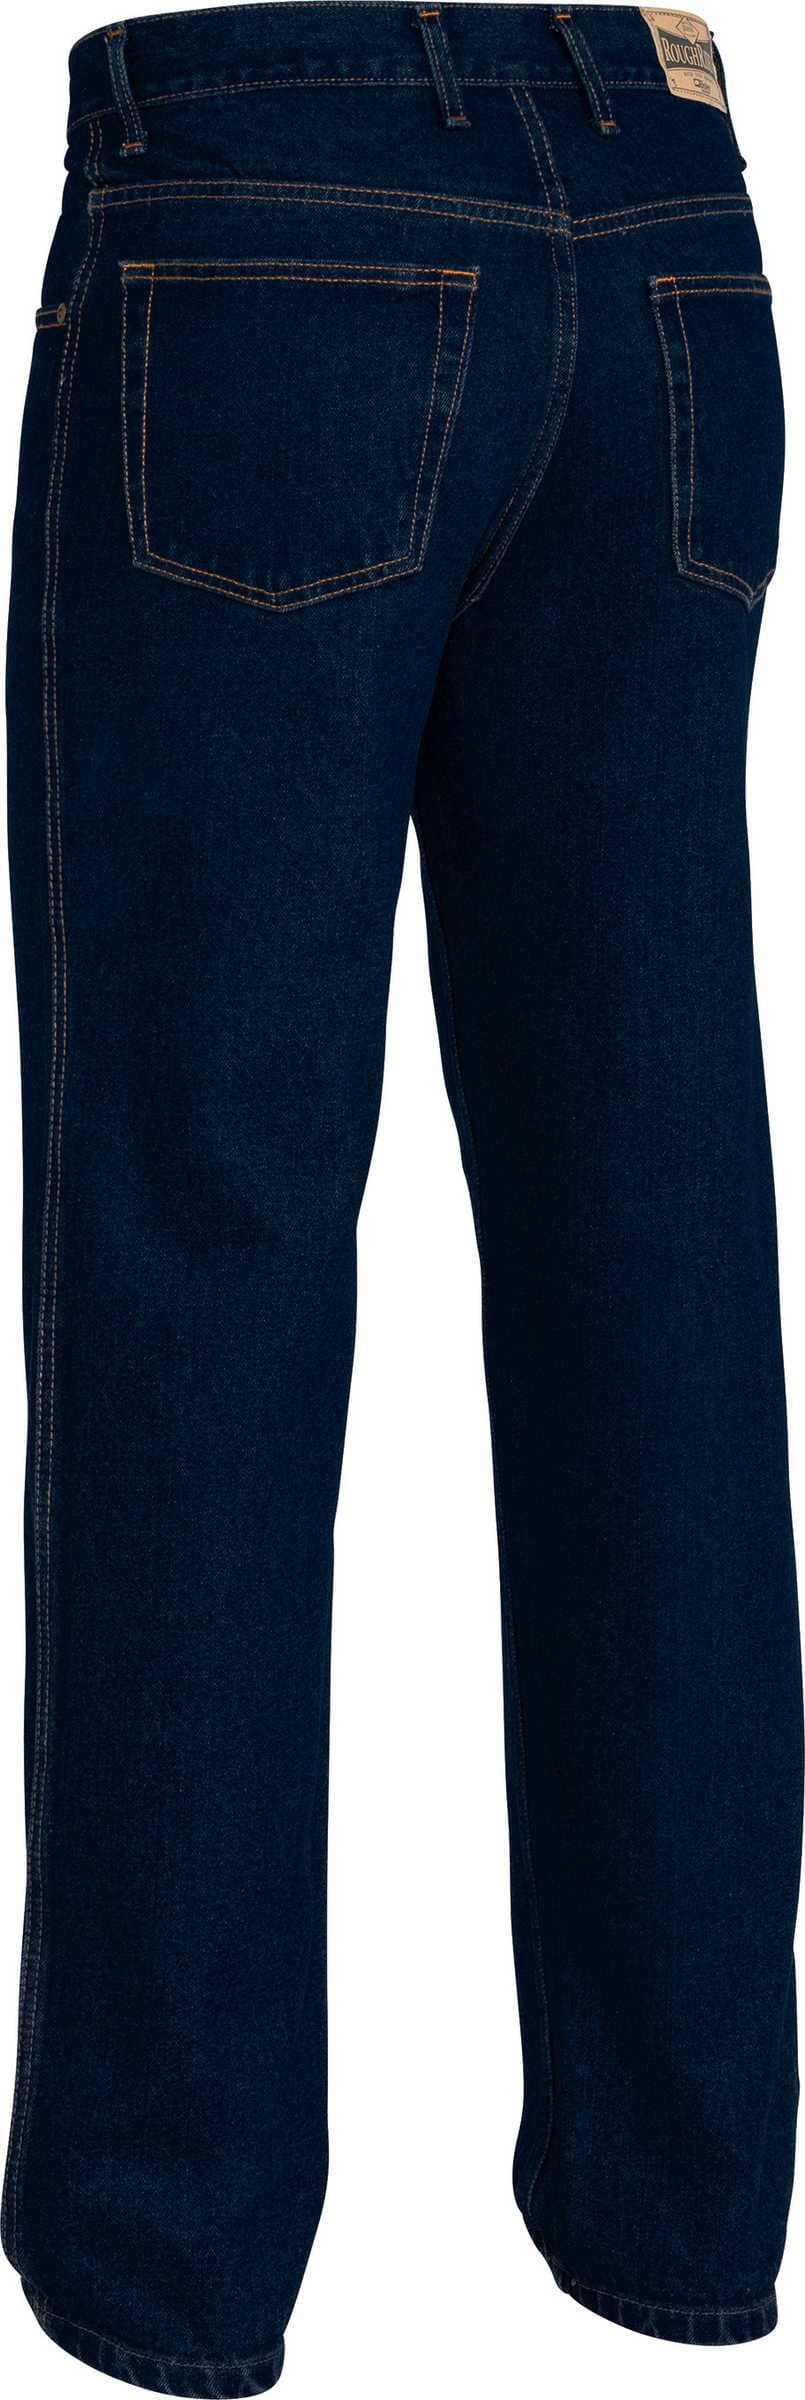 Bisley Rough Rider Denim Jeans - Blue (BP6050) | Buy Men's Pants ...